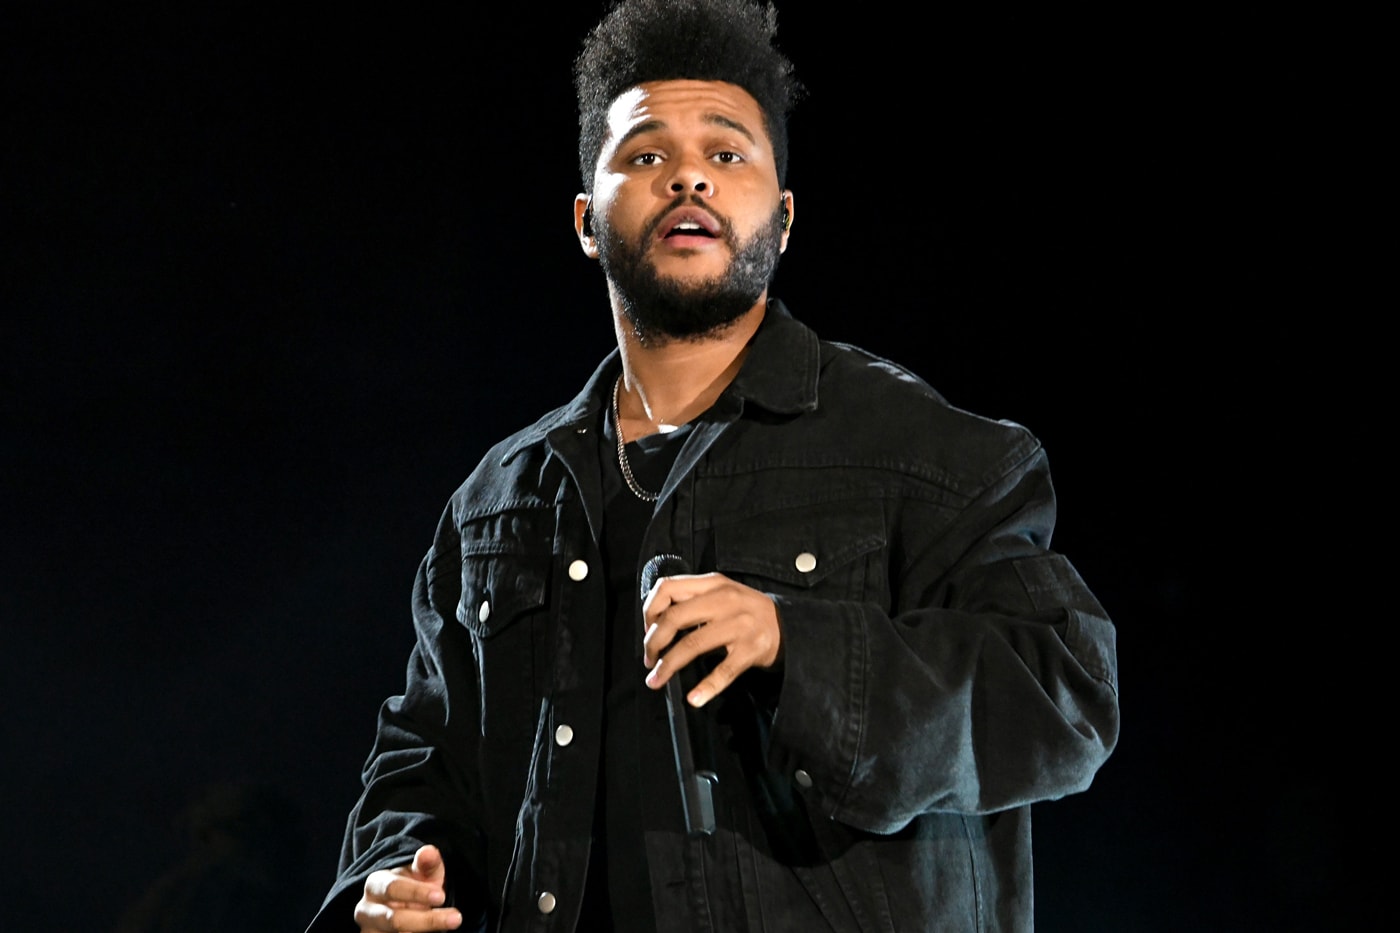 The Weeknd My Dear Melancholy New Album XO Toronto march 30 release date info drop